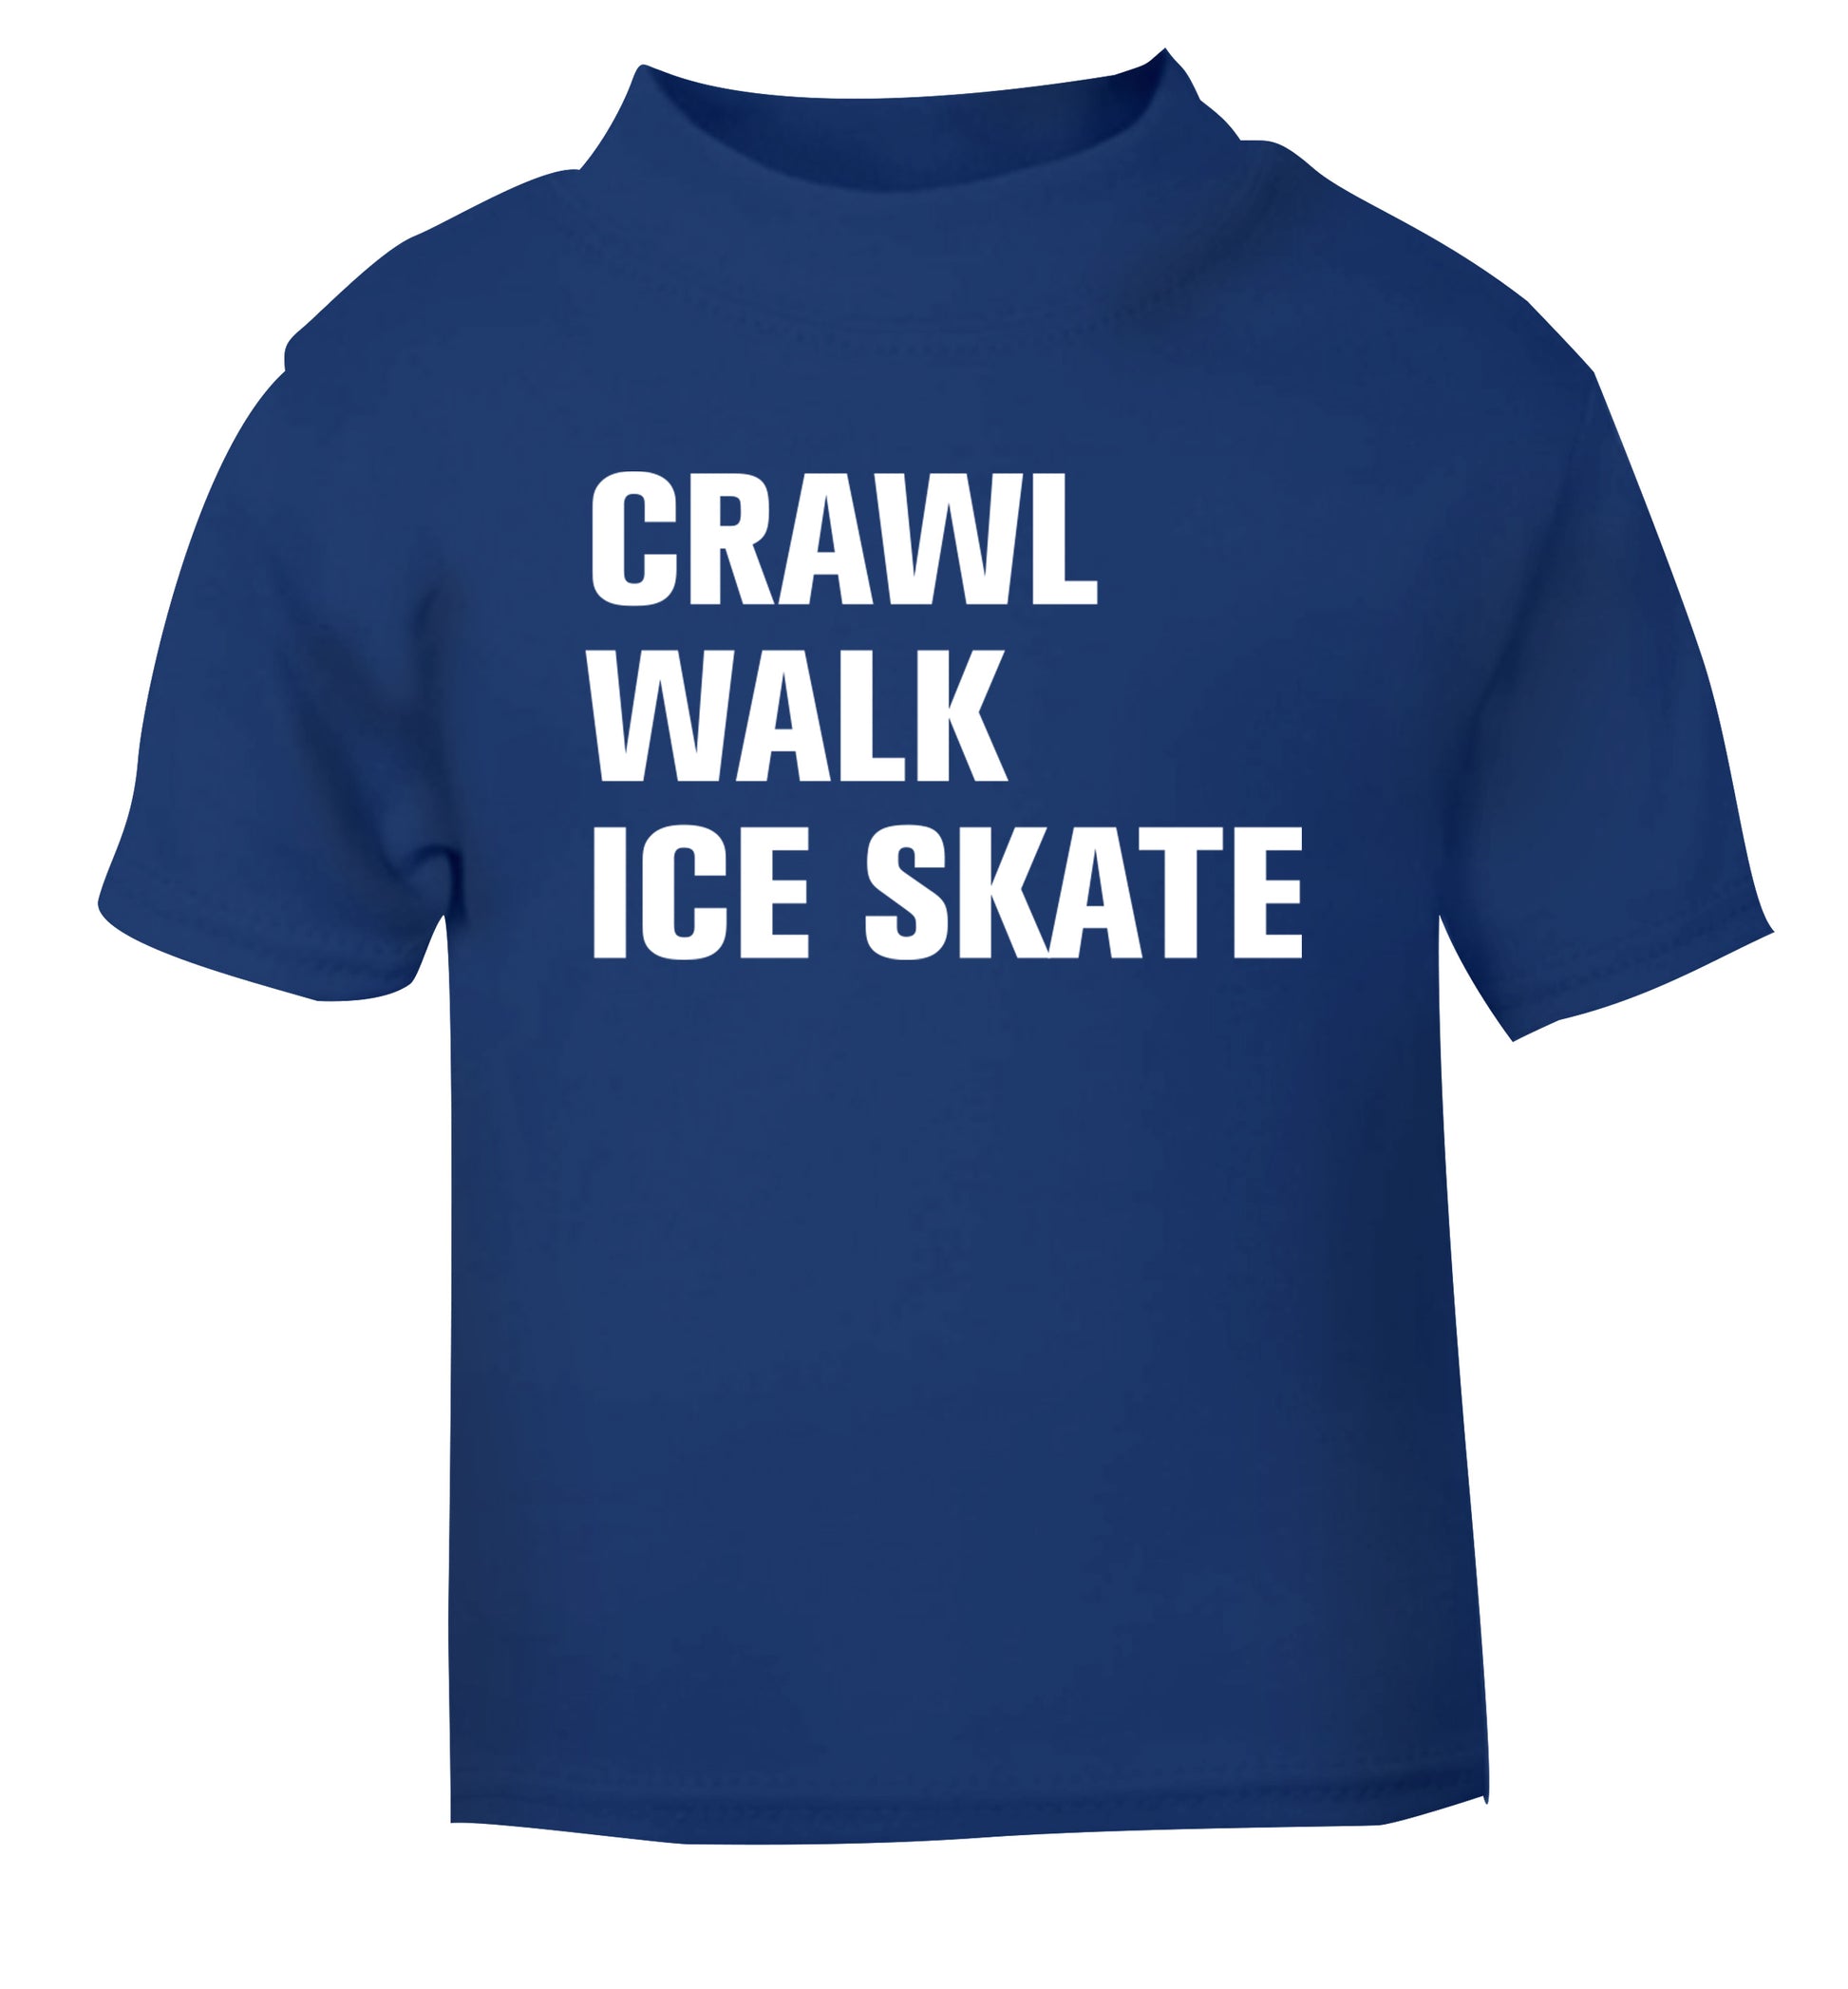 Crawl walk ice skate blue Baby Toddler Tshirt 2 Years